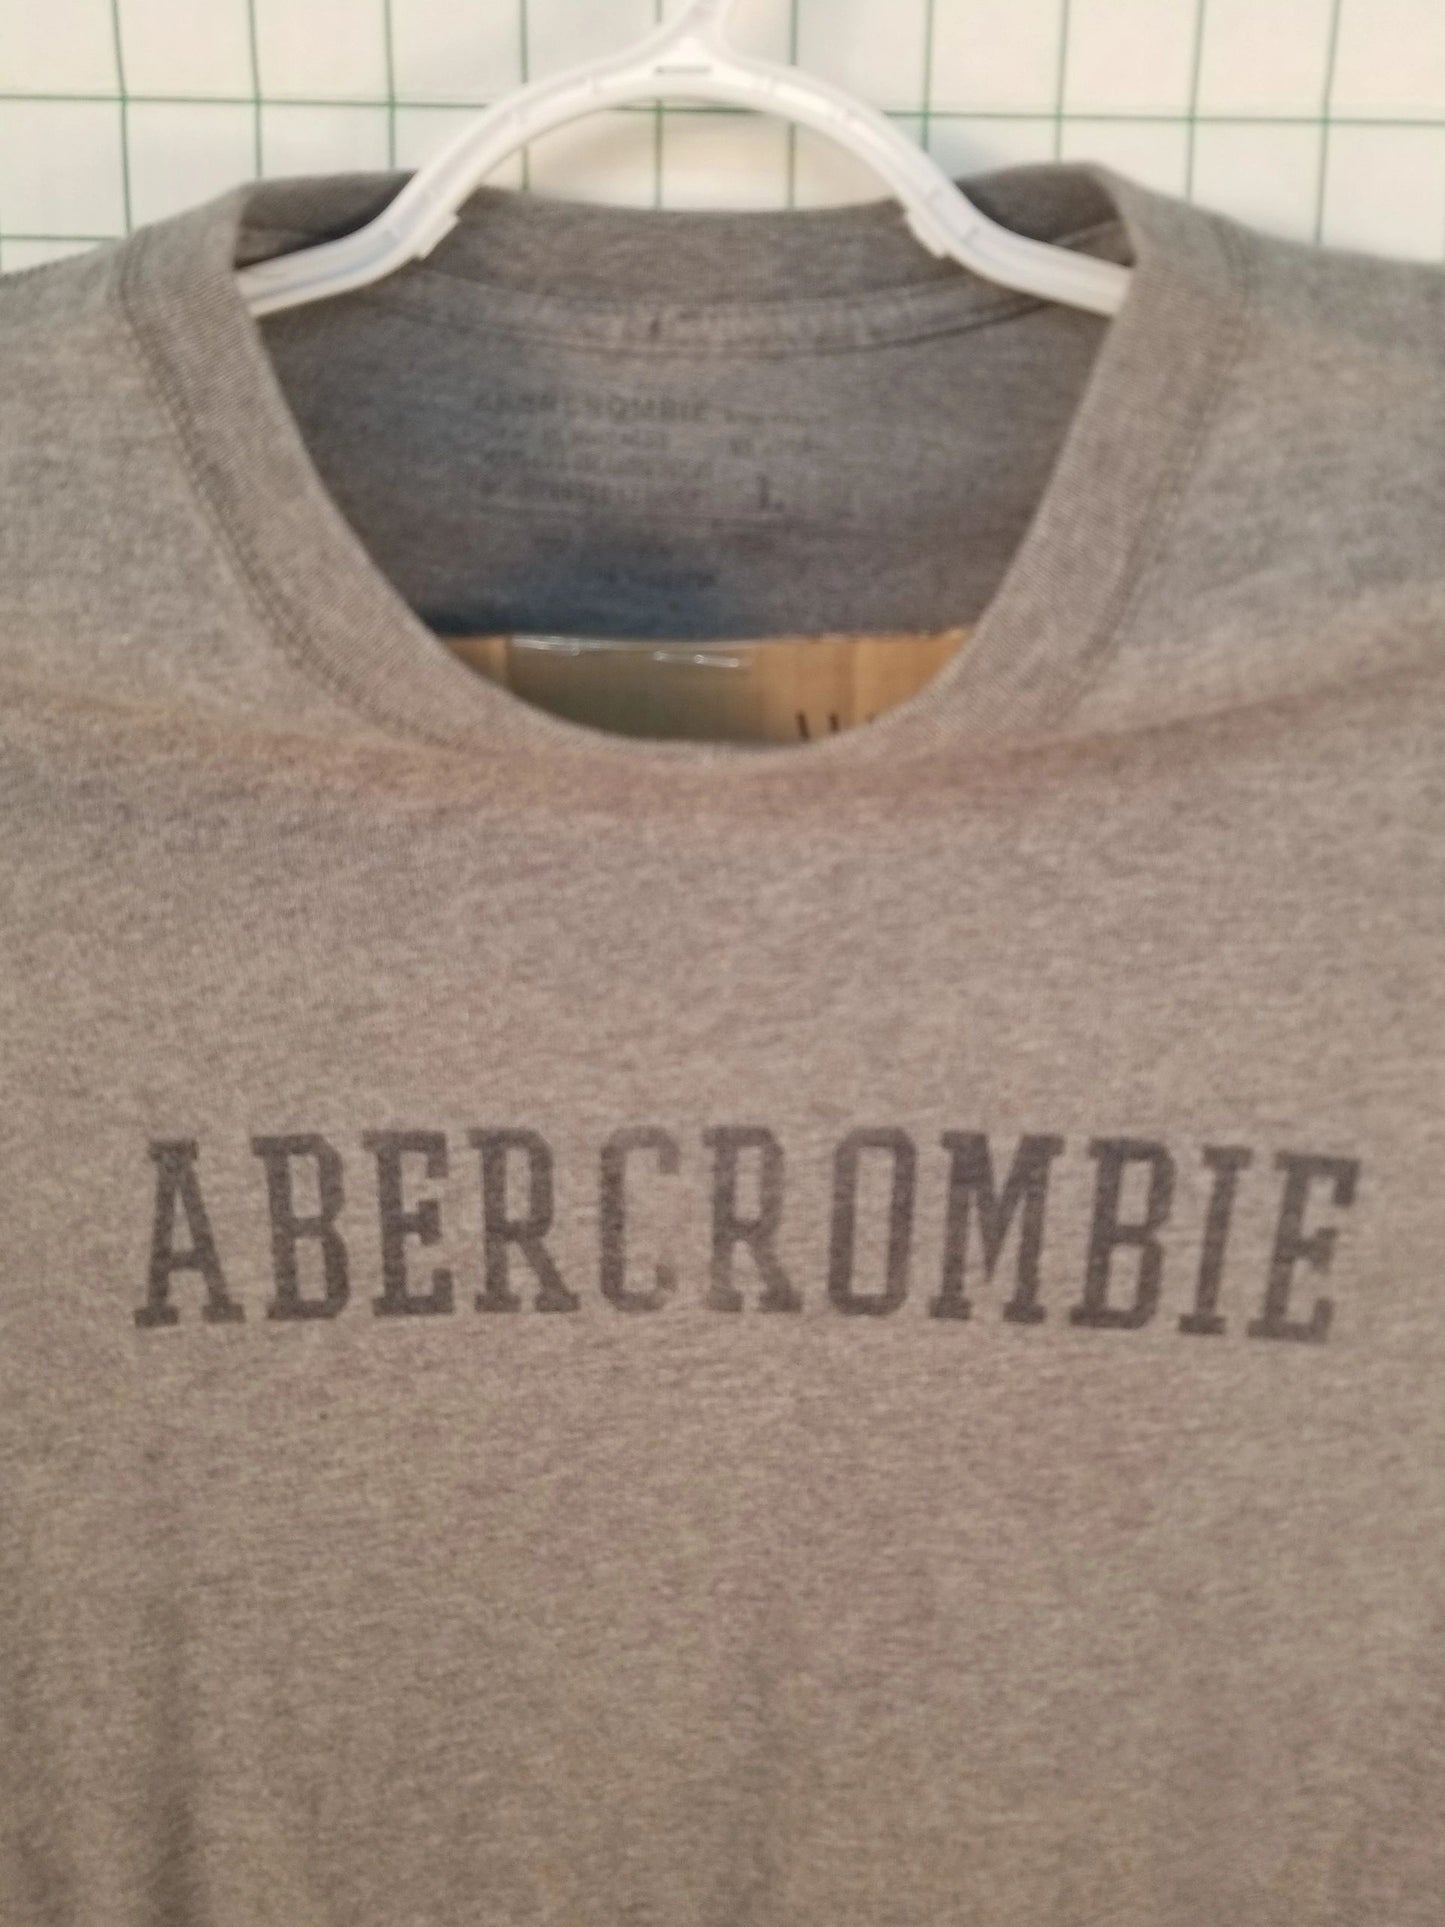 Abercrombie Pullover Sweatshirt